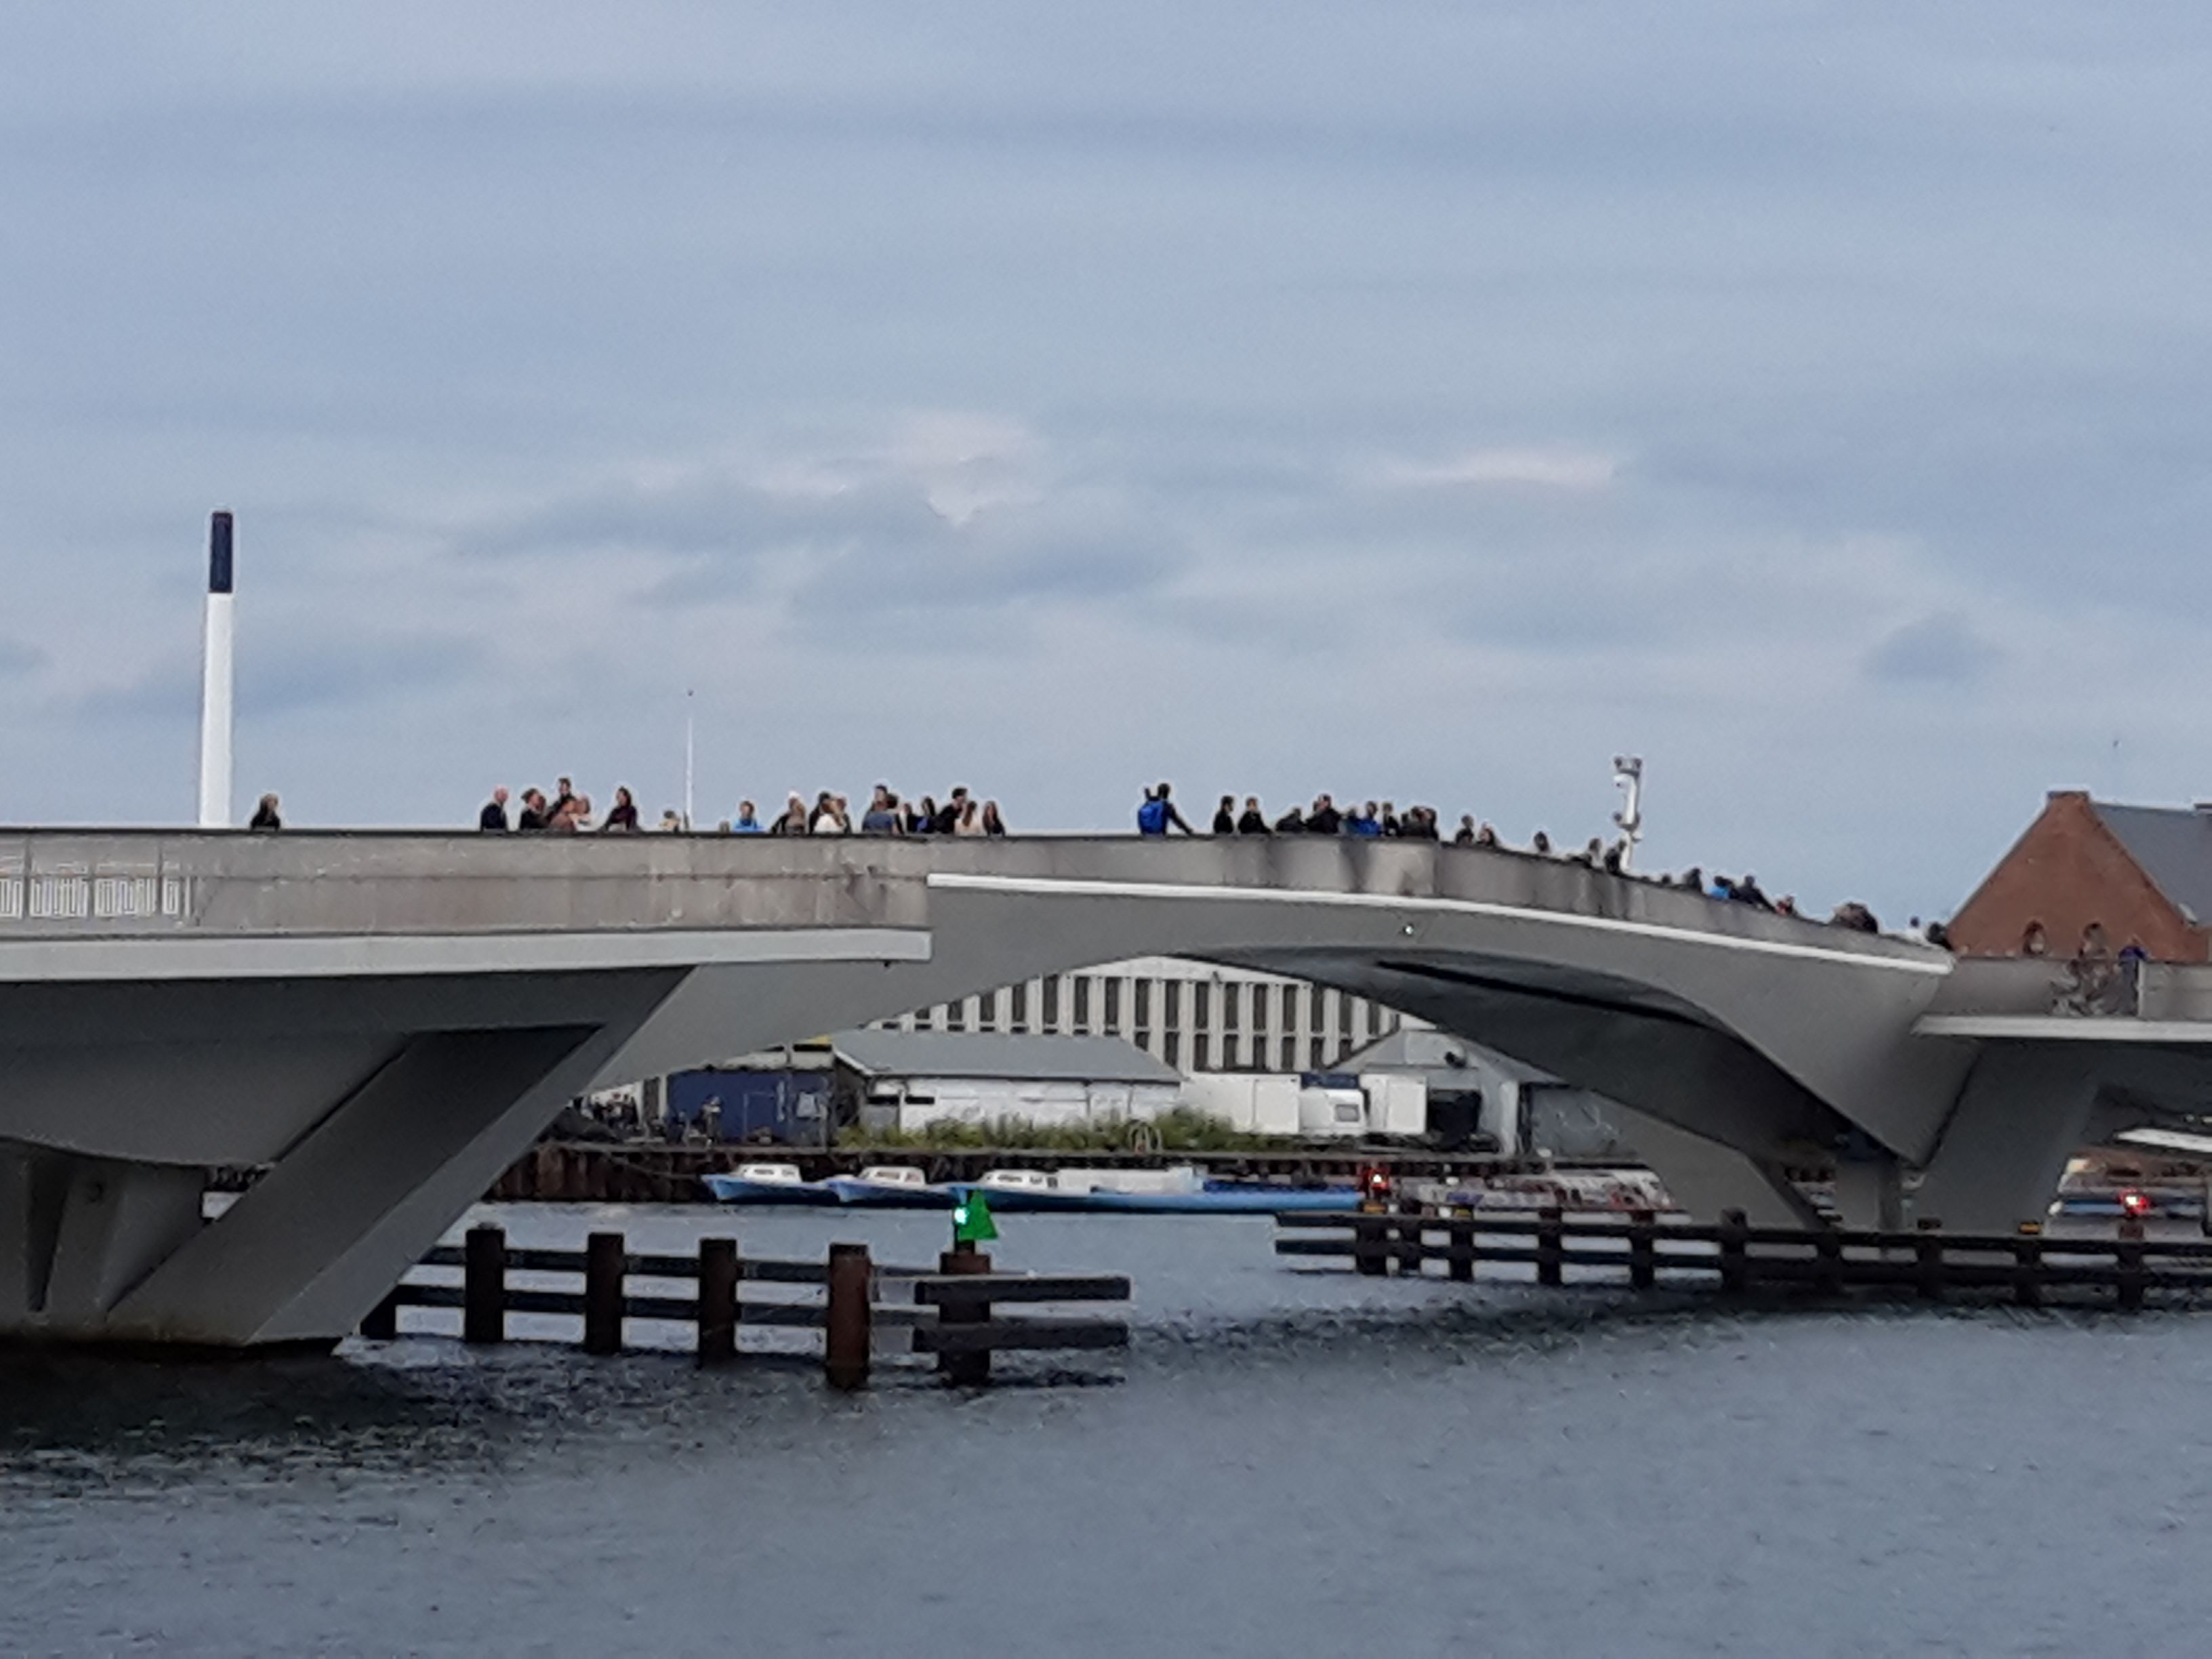 Copenhagen bridge finally opens